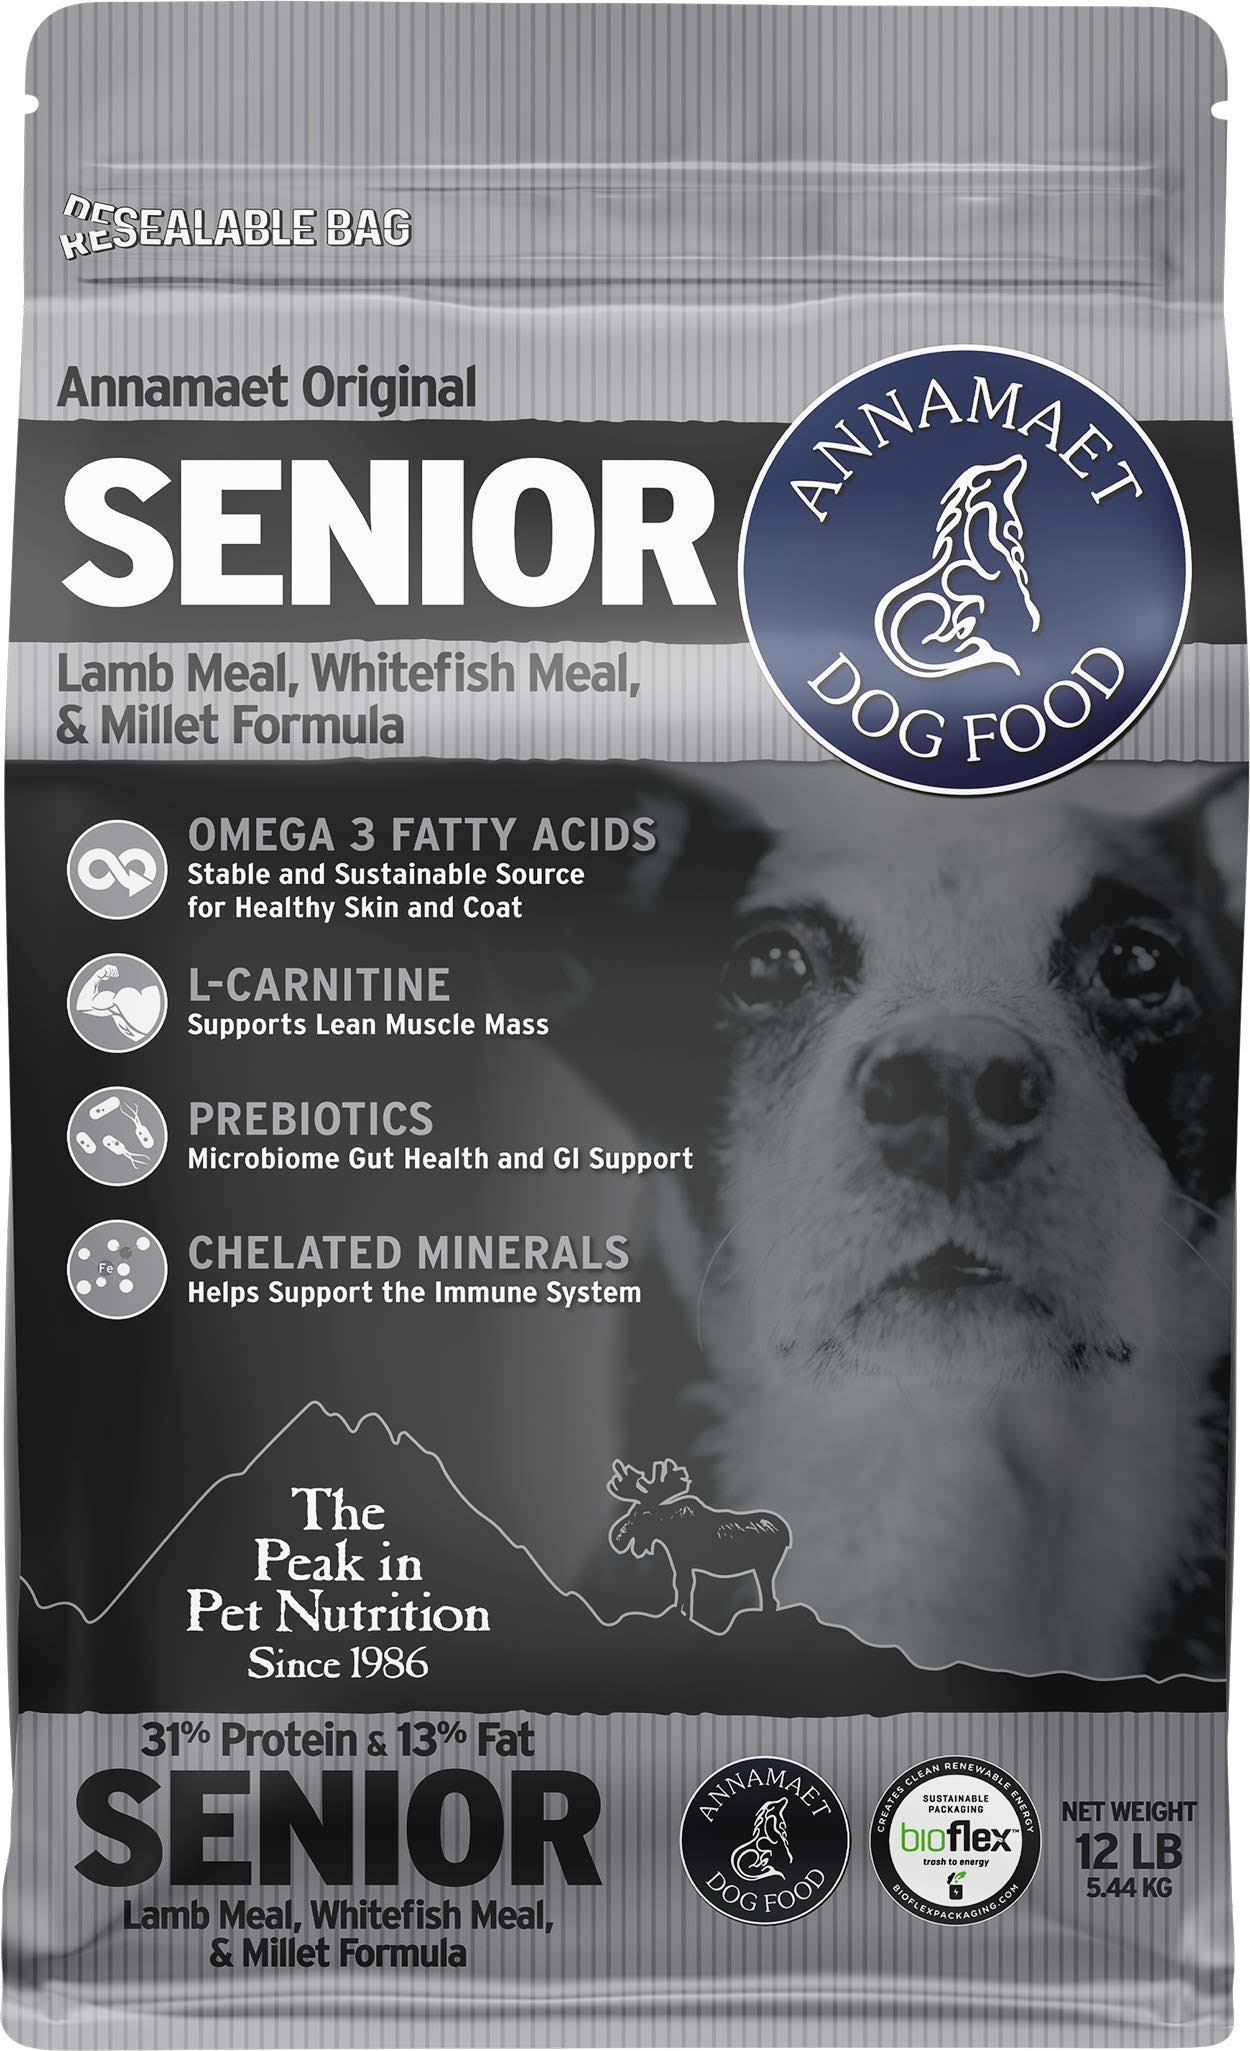 Annamaet Original 31% Senior Dry Dog Food, 12-lb BAG.